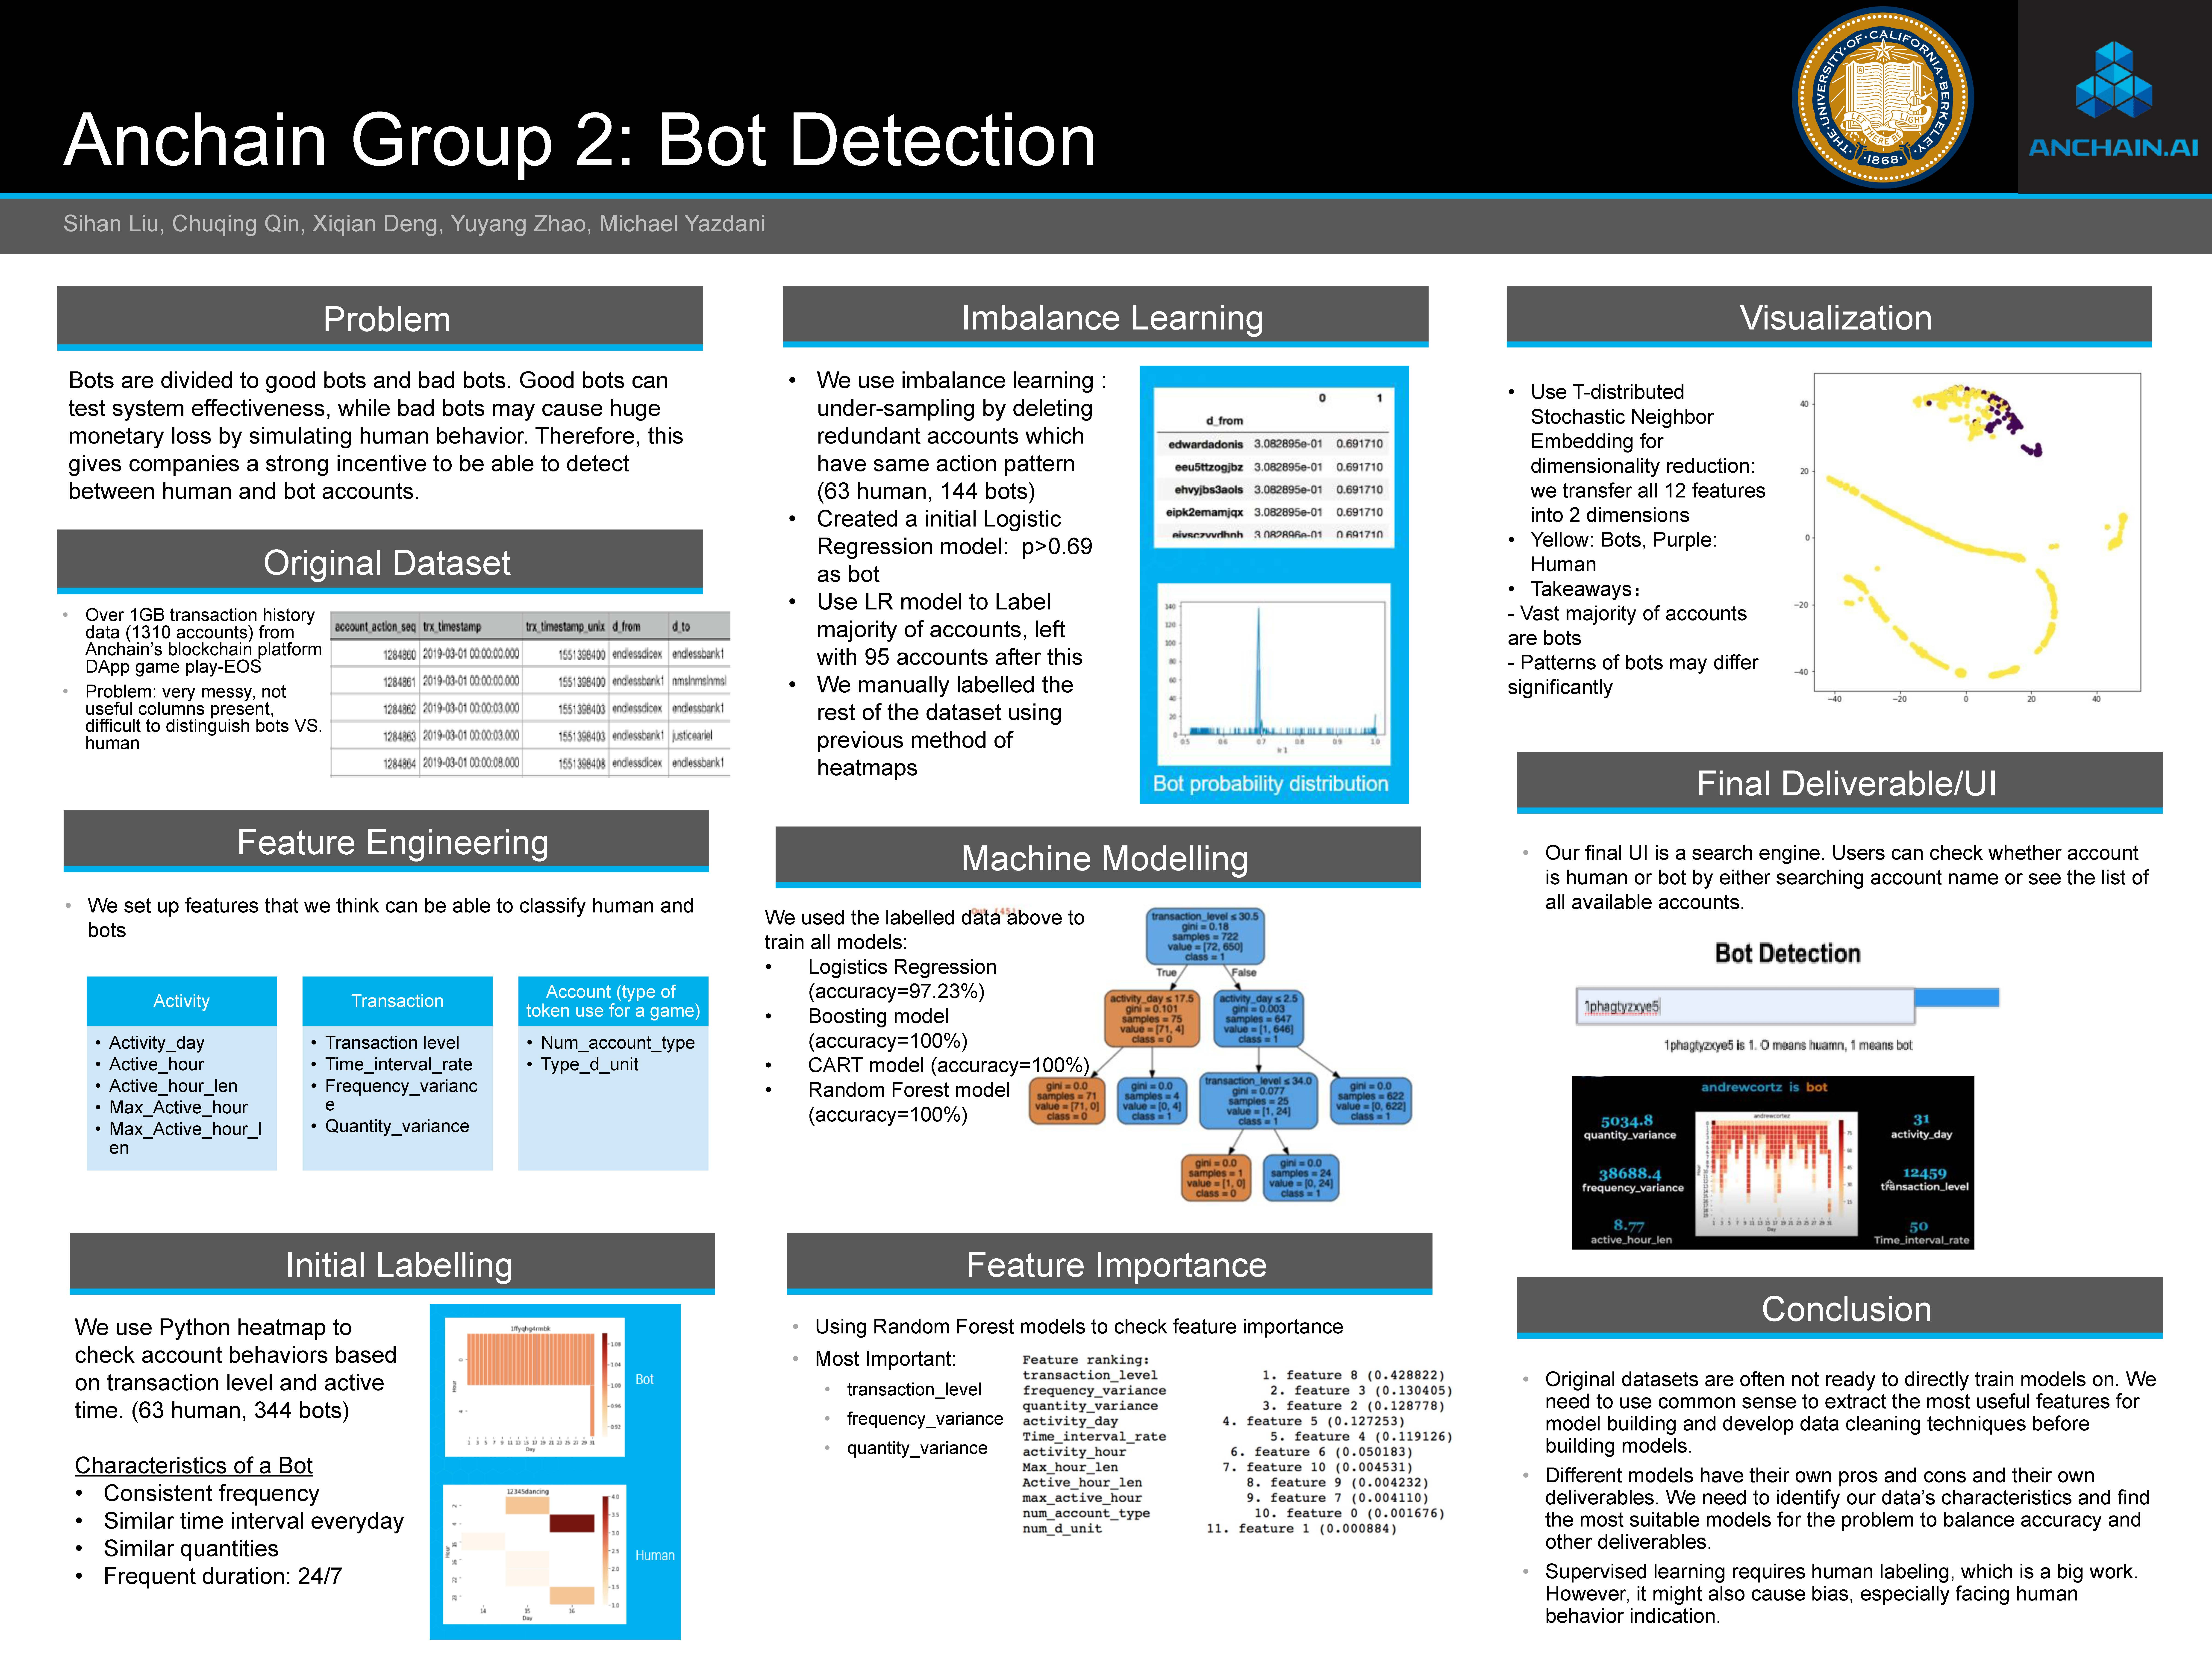 Project Description of Anchain Group 2: Bot Detection